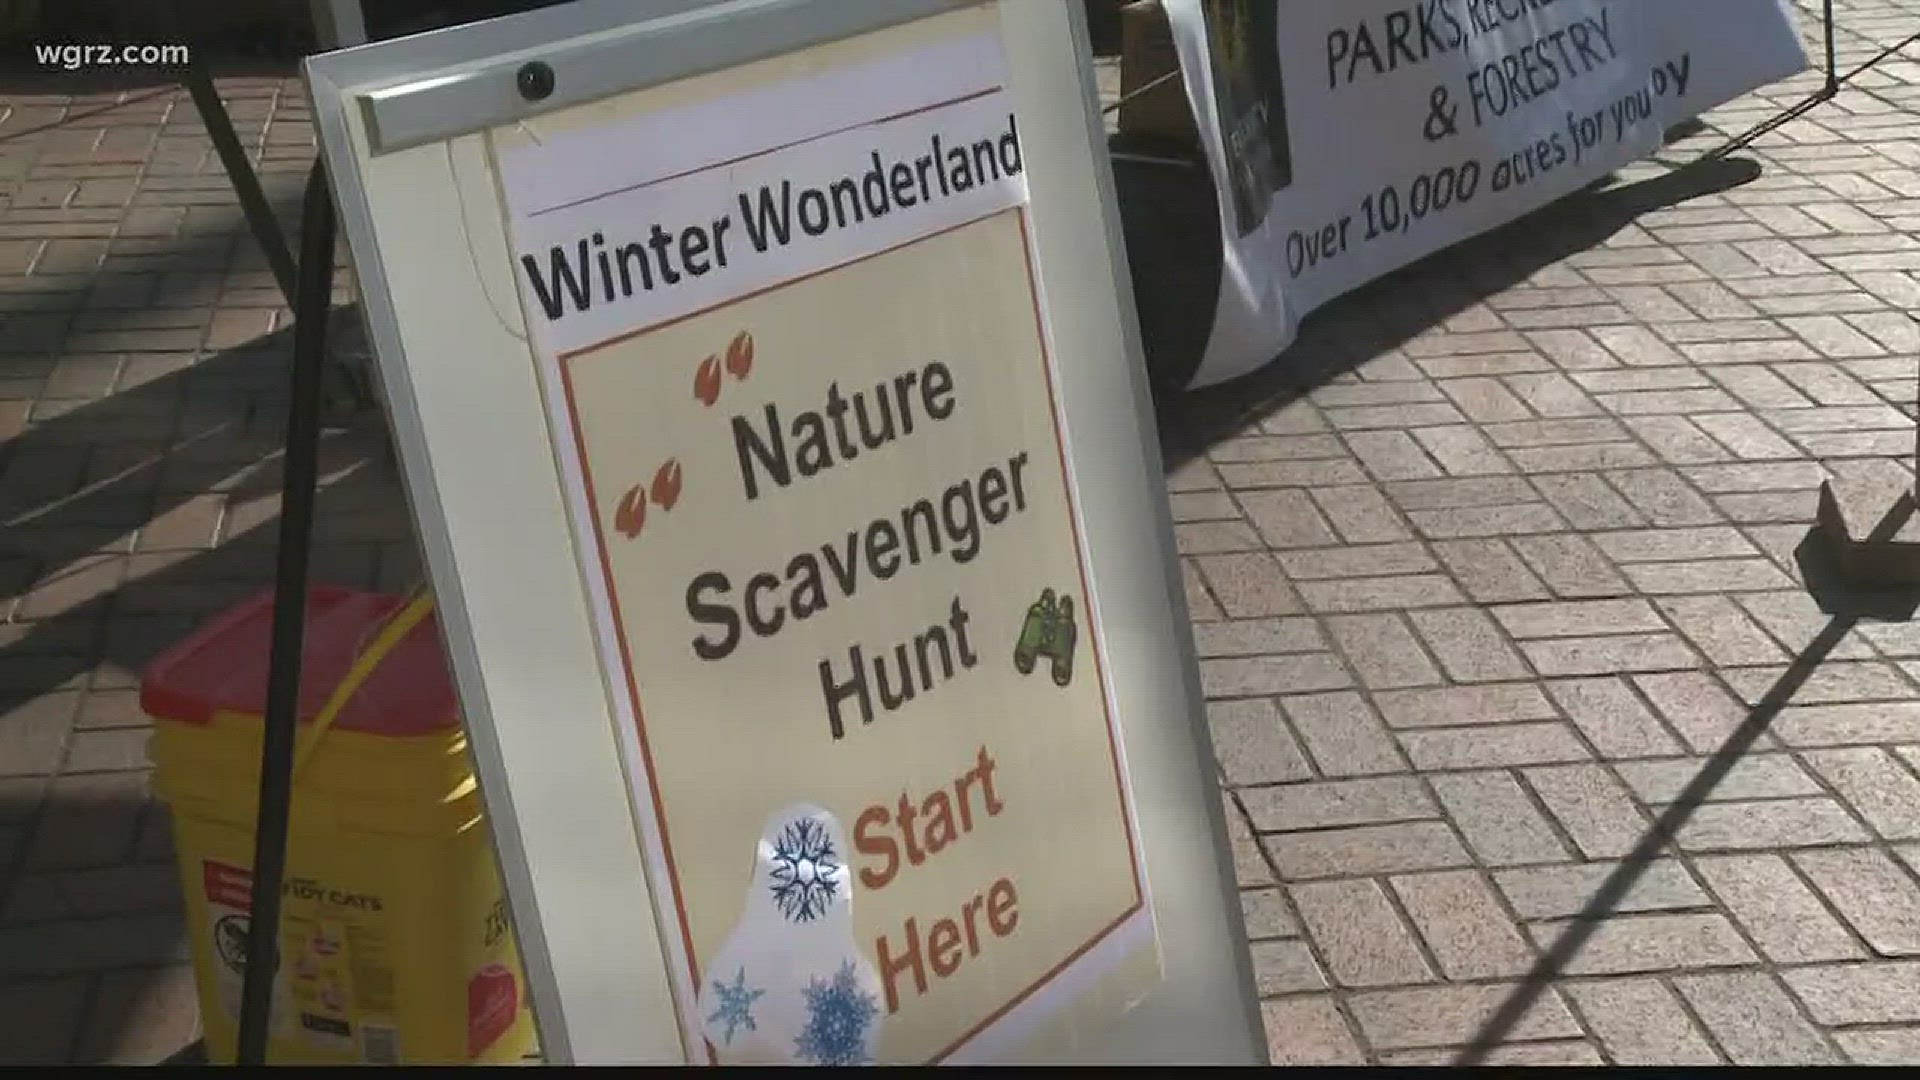 Saturday, the state DEC and Reinstein Woods will host "Winter Wonderland in the Woods."